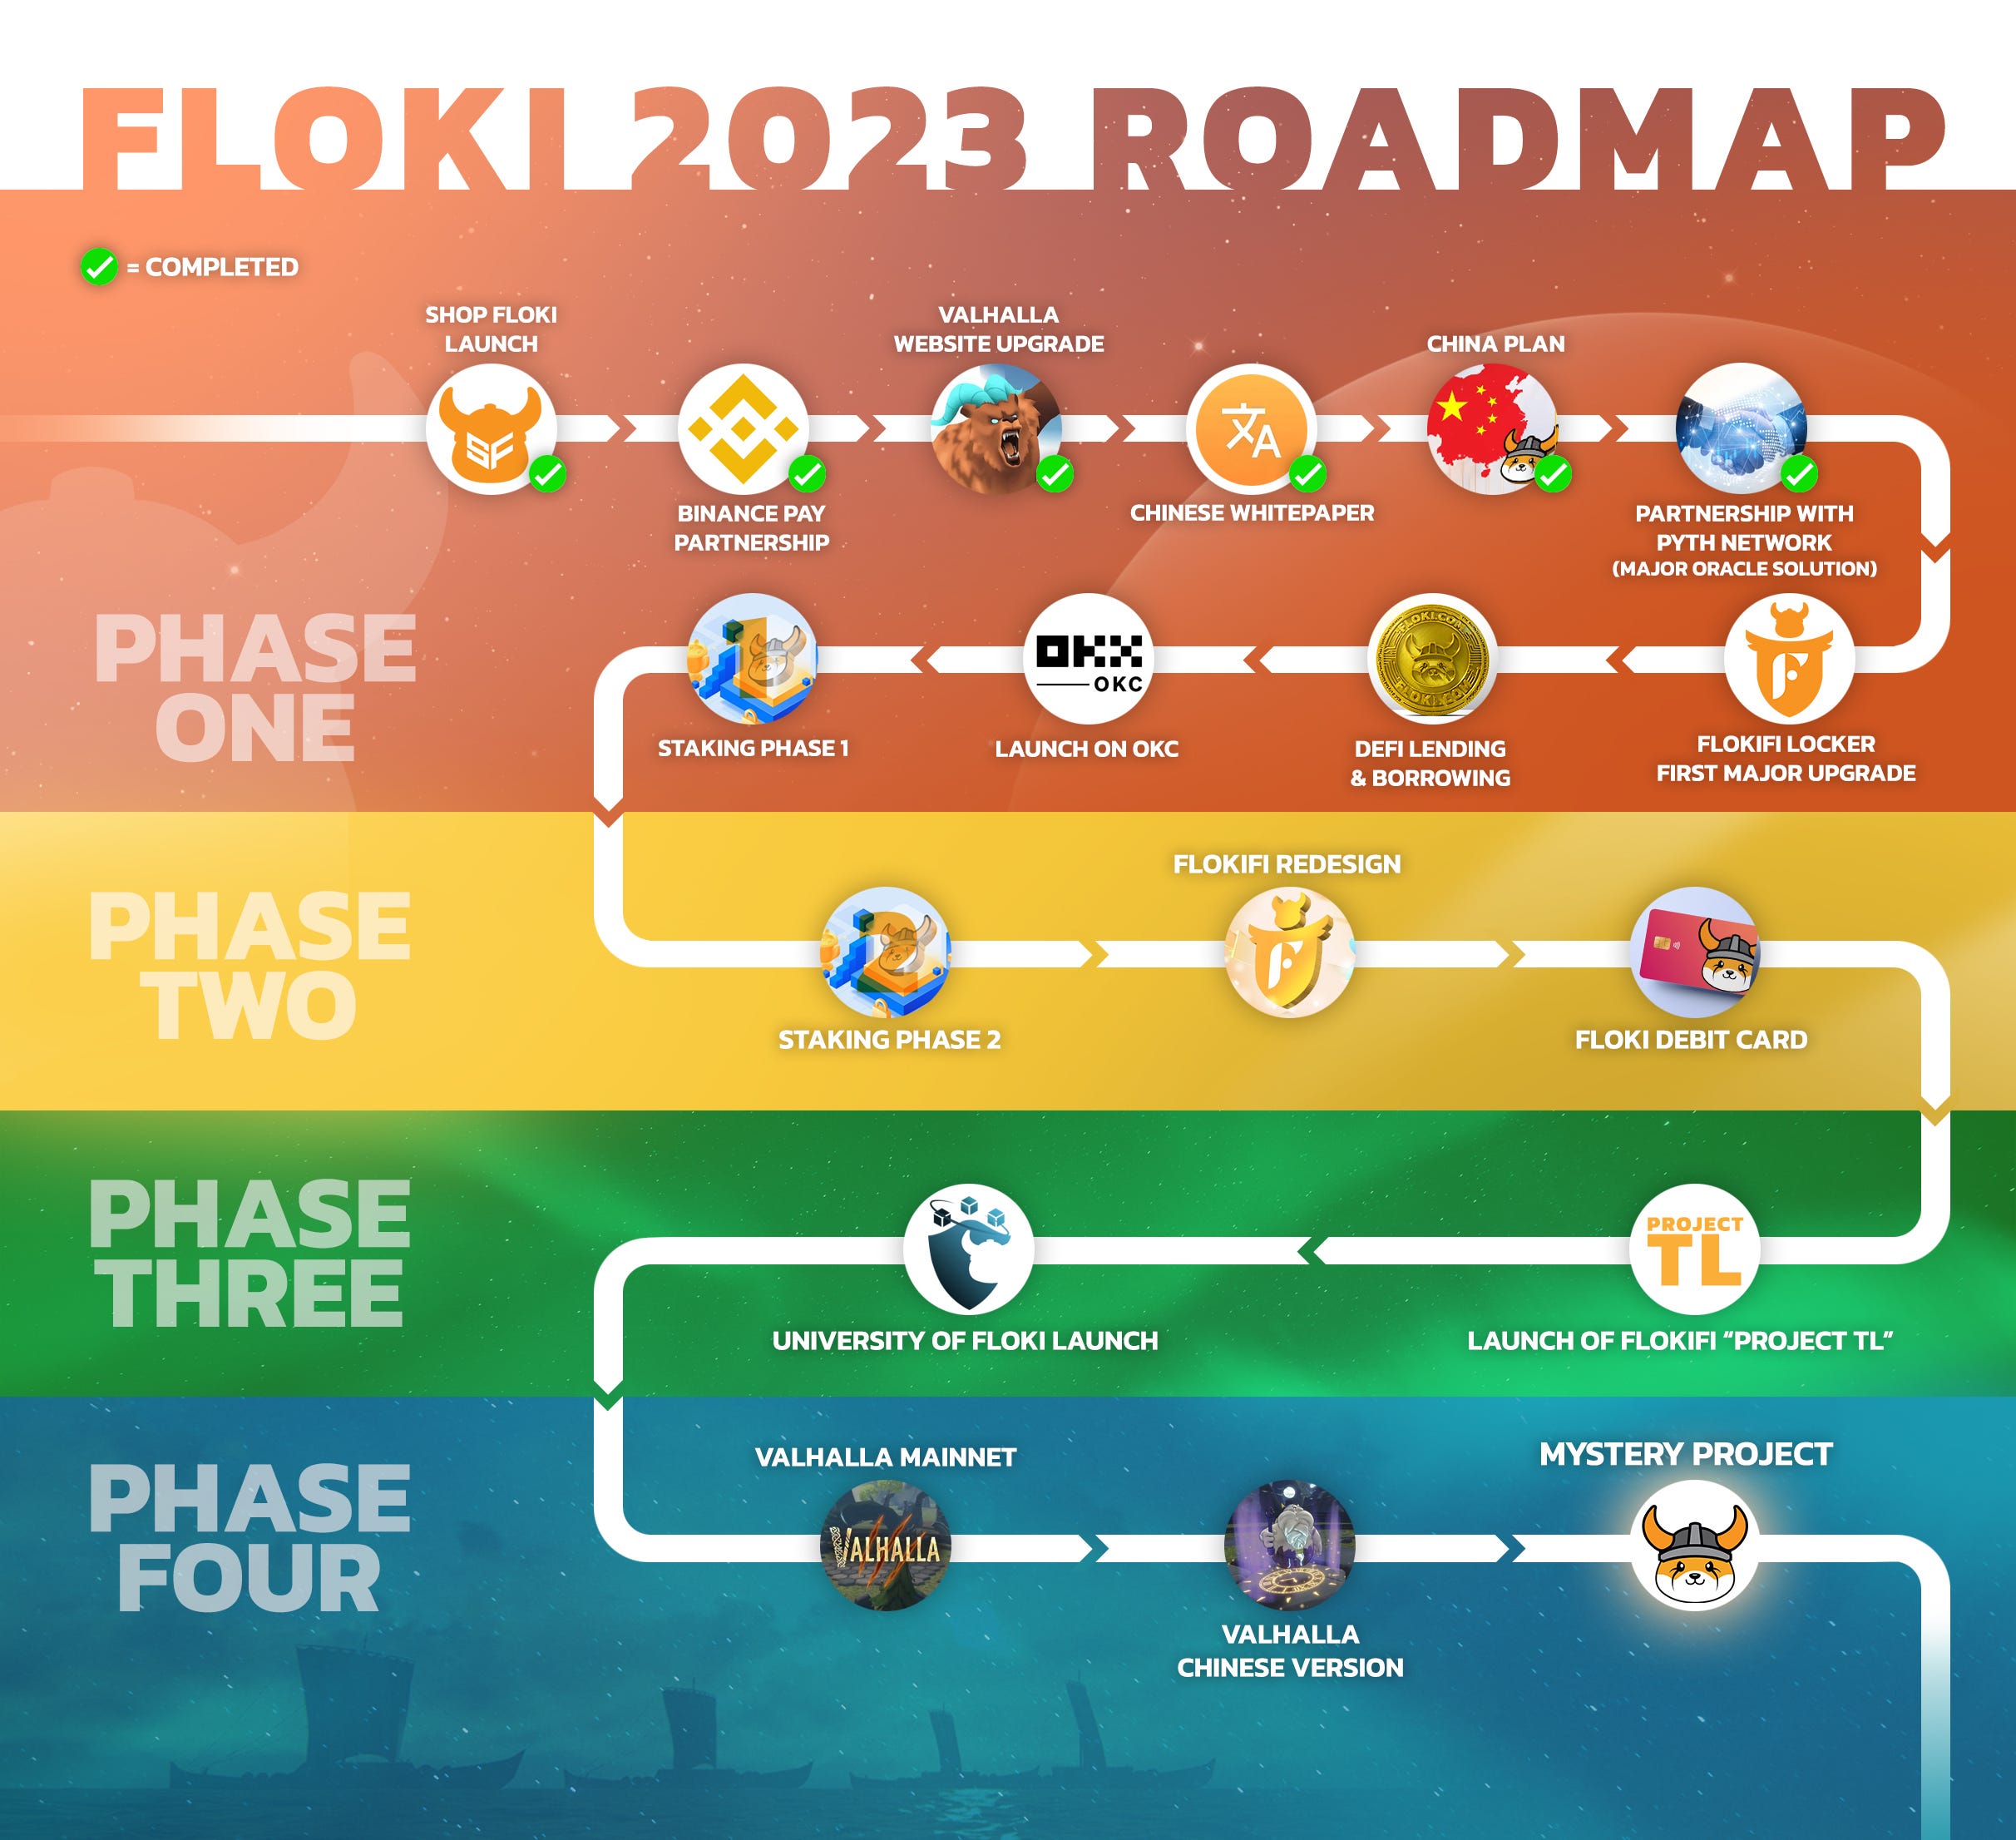 FLOKI 2023 ROADMAP